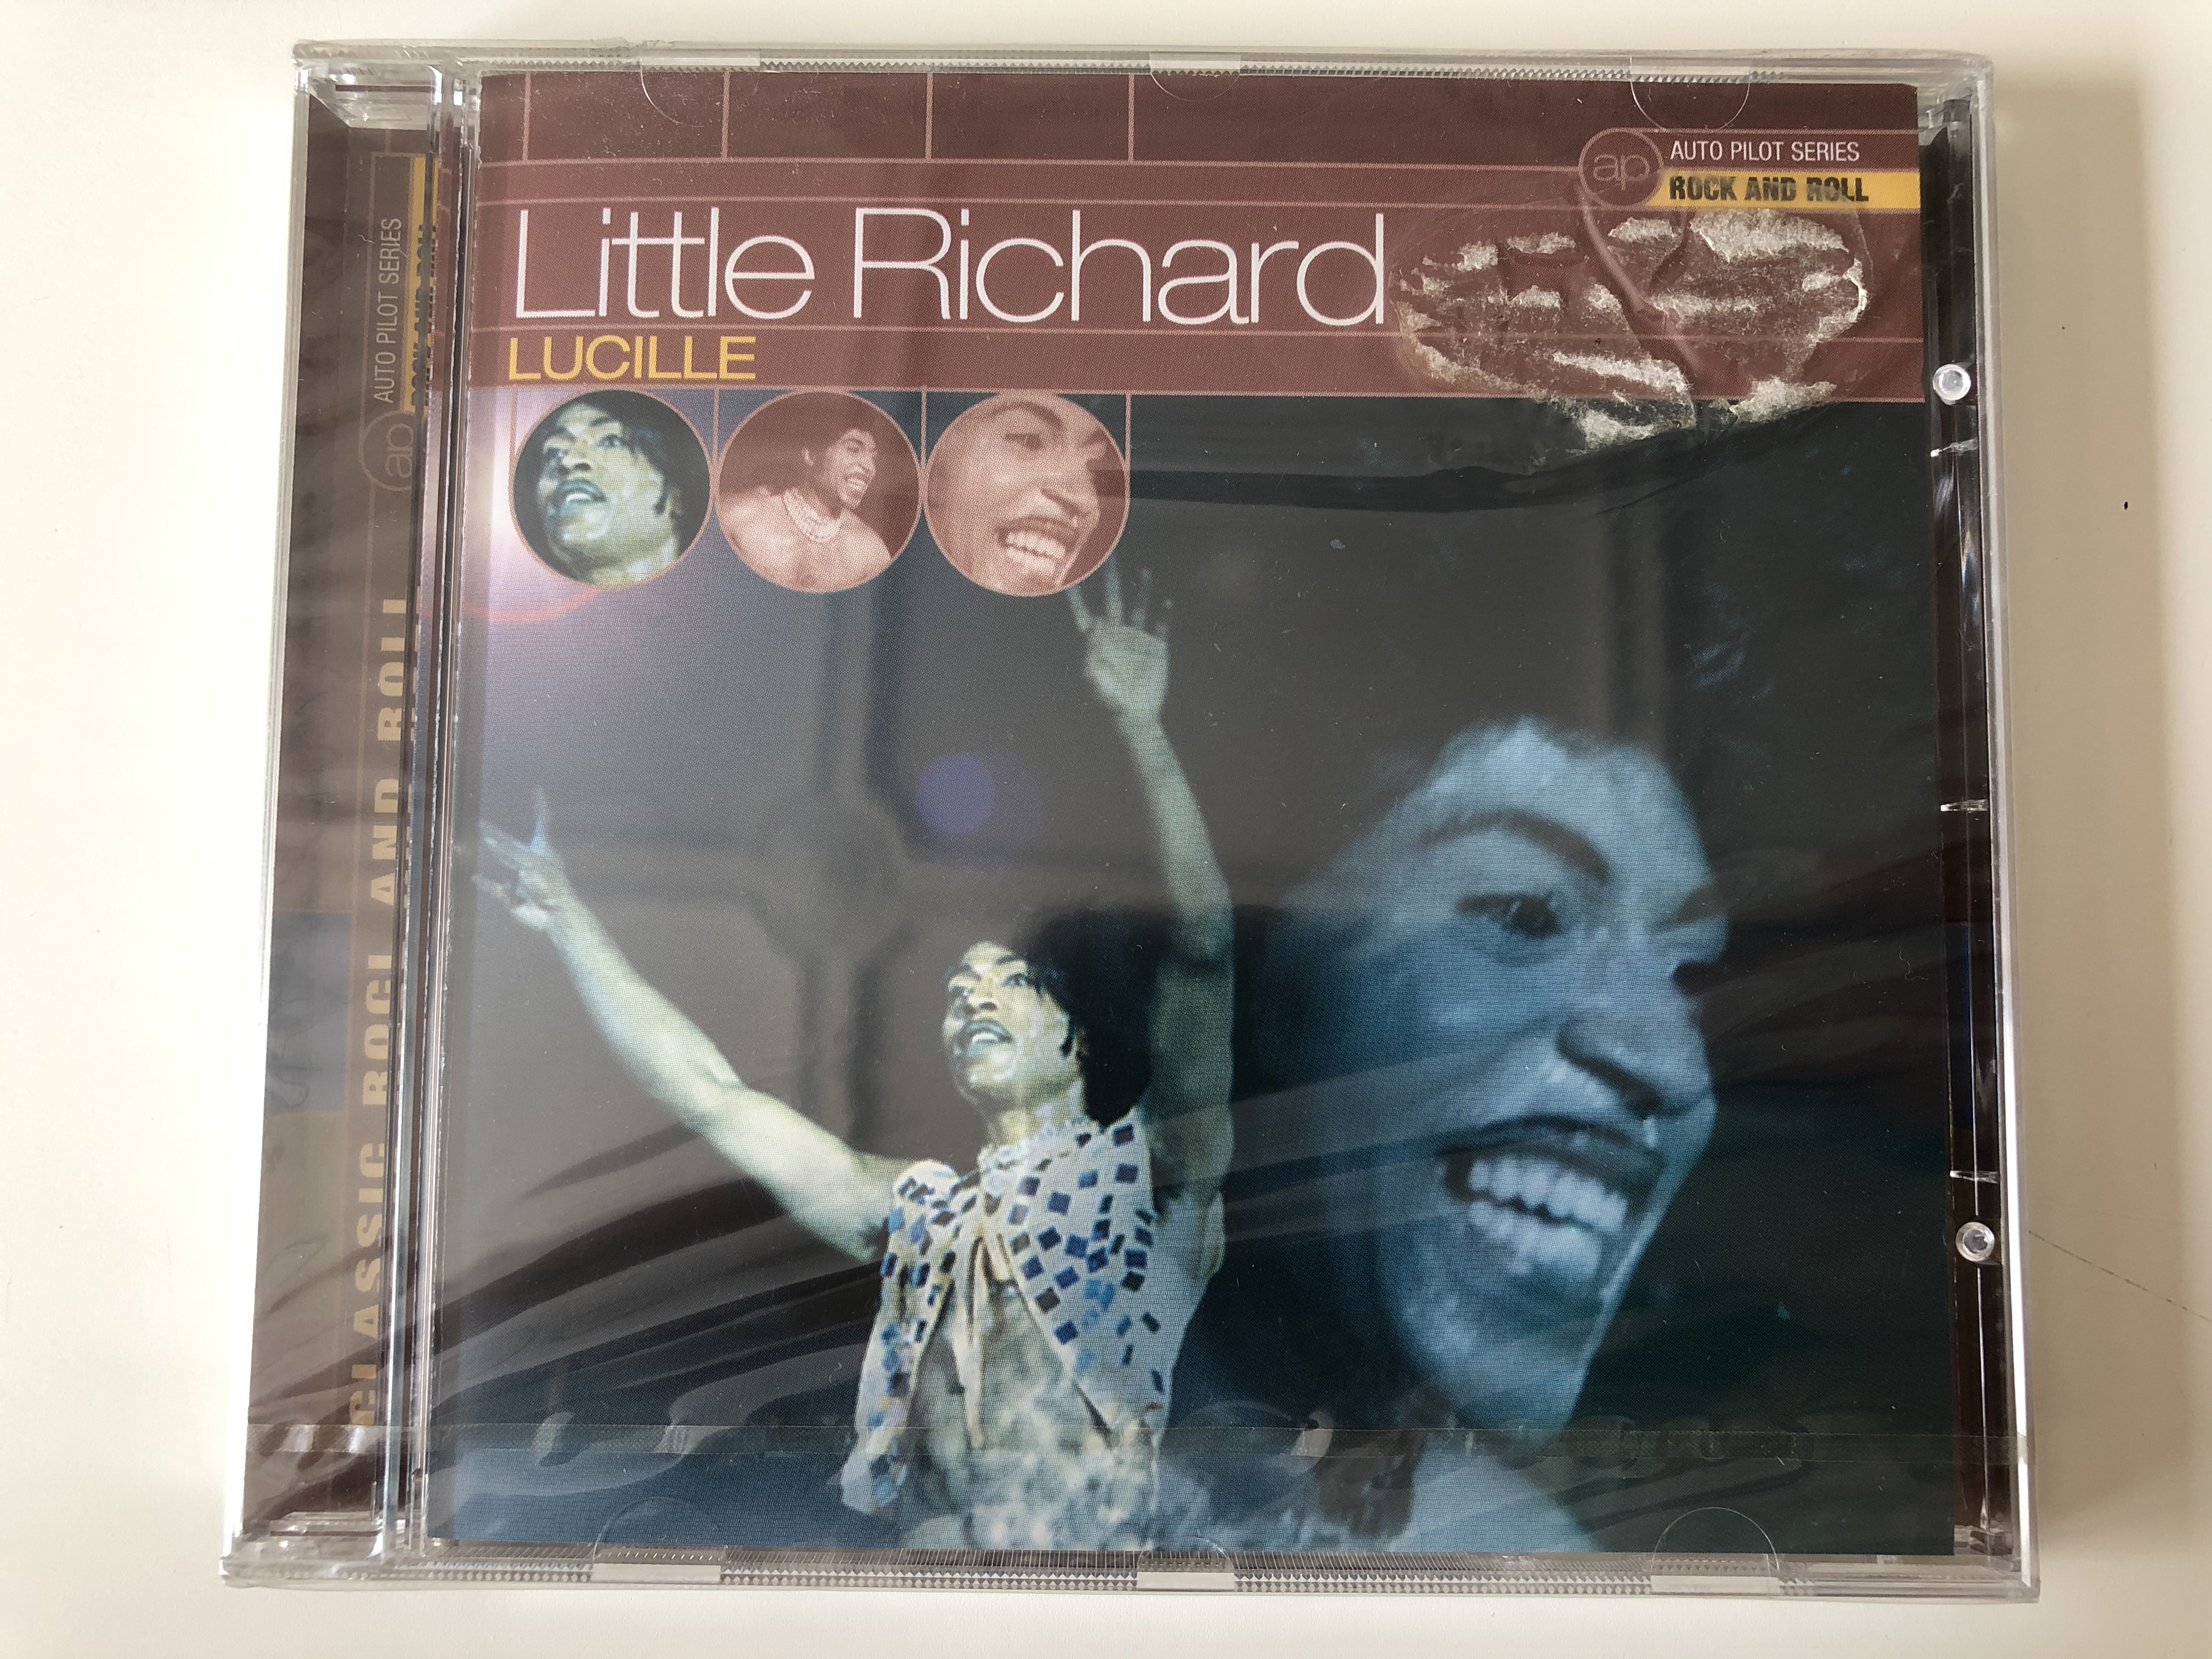 little-richard-lucille-auto-pilot-series-rock-and-roll-live-gold-audio-cd-1998-5038894000610-1-.jpg